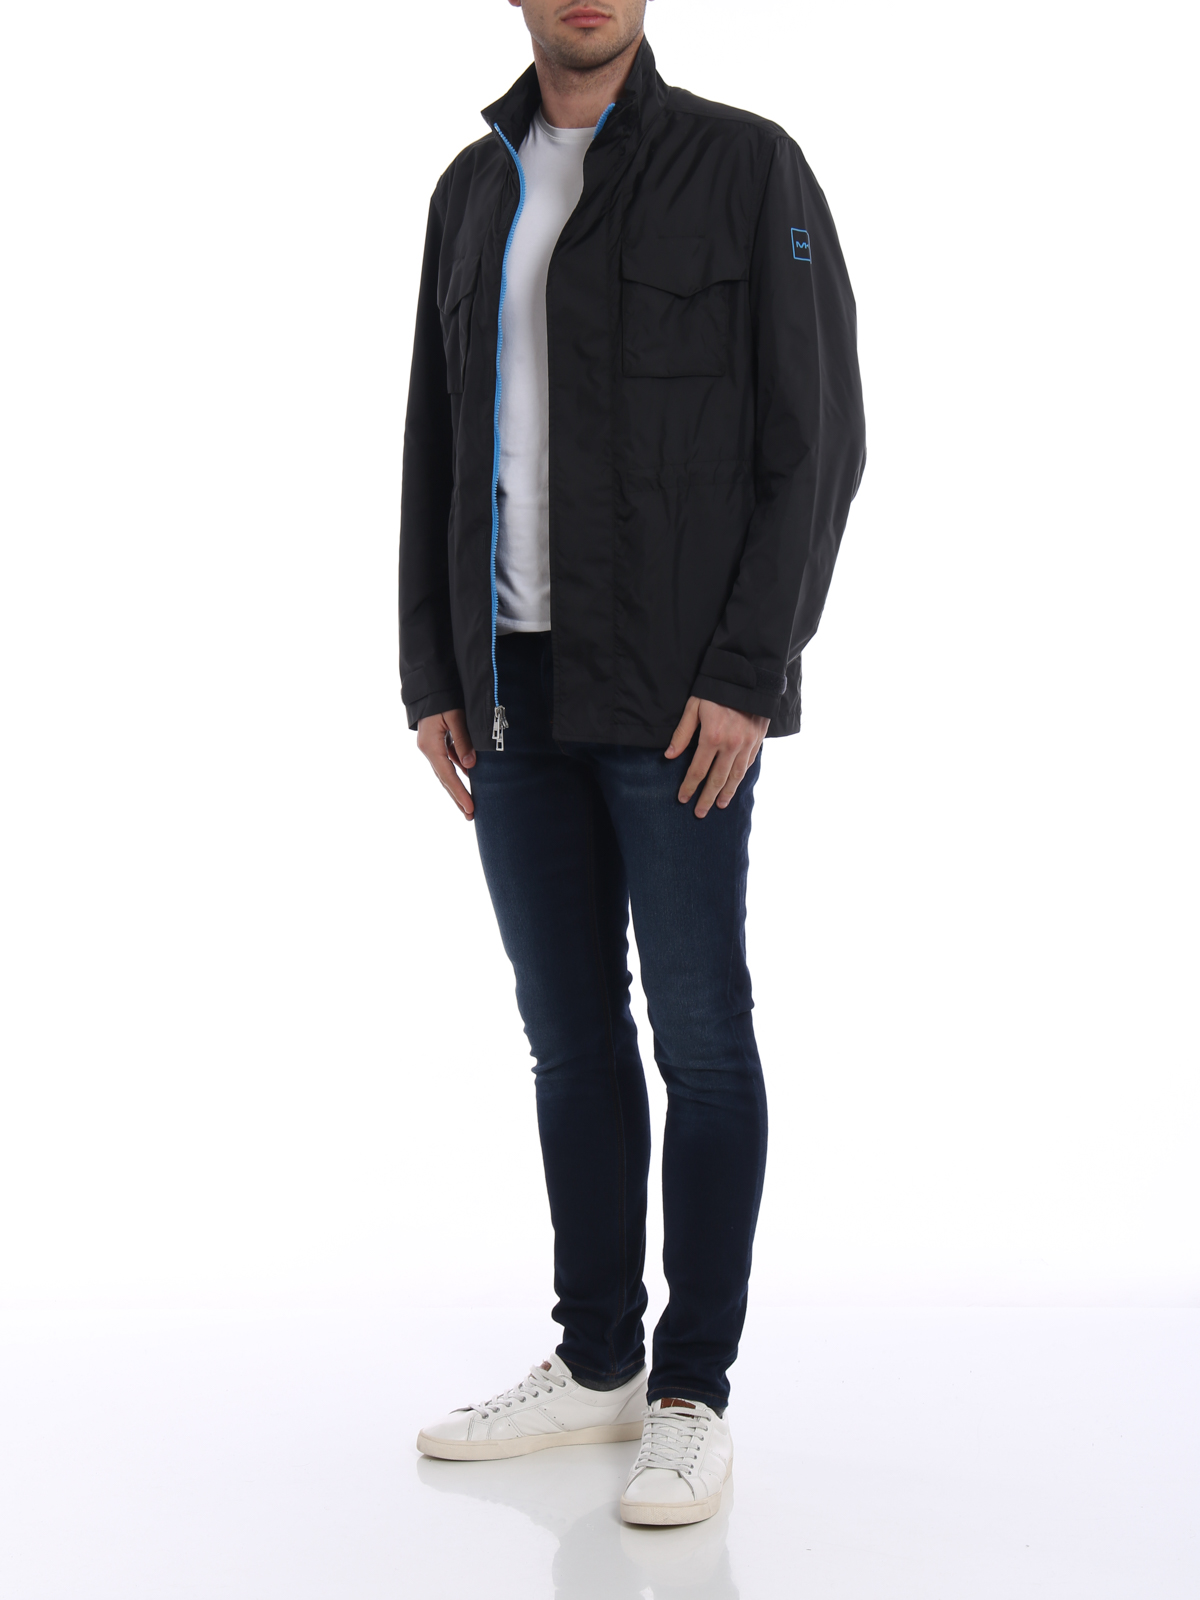 Michael Kors Coats  Jackets for Men  Nordstrom Rack